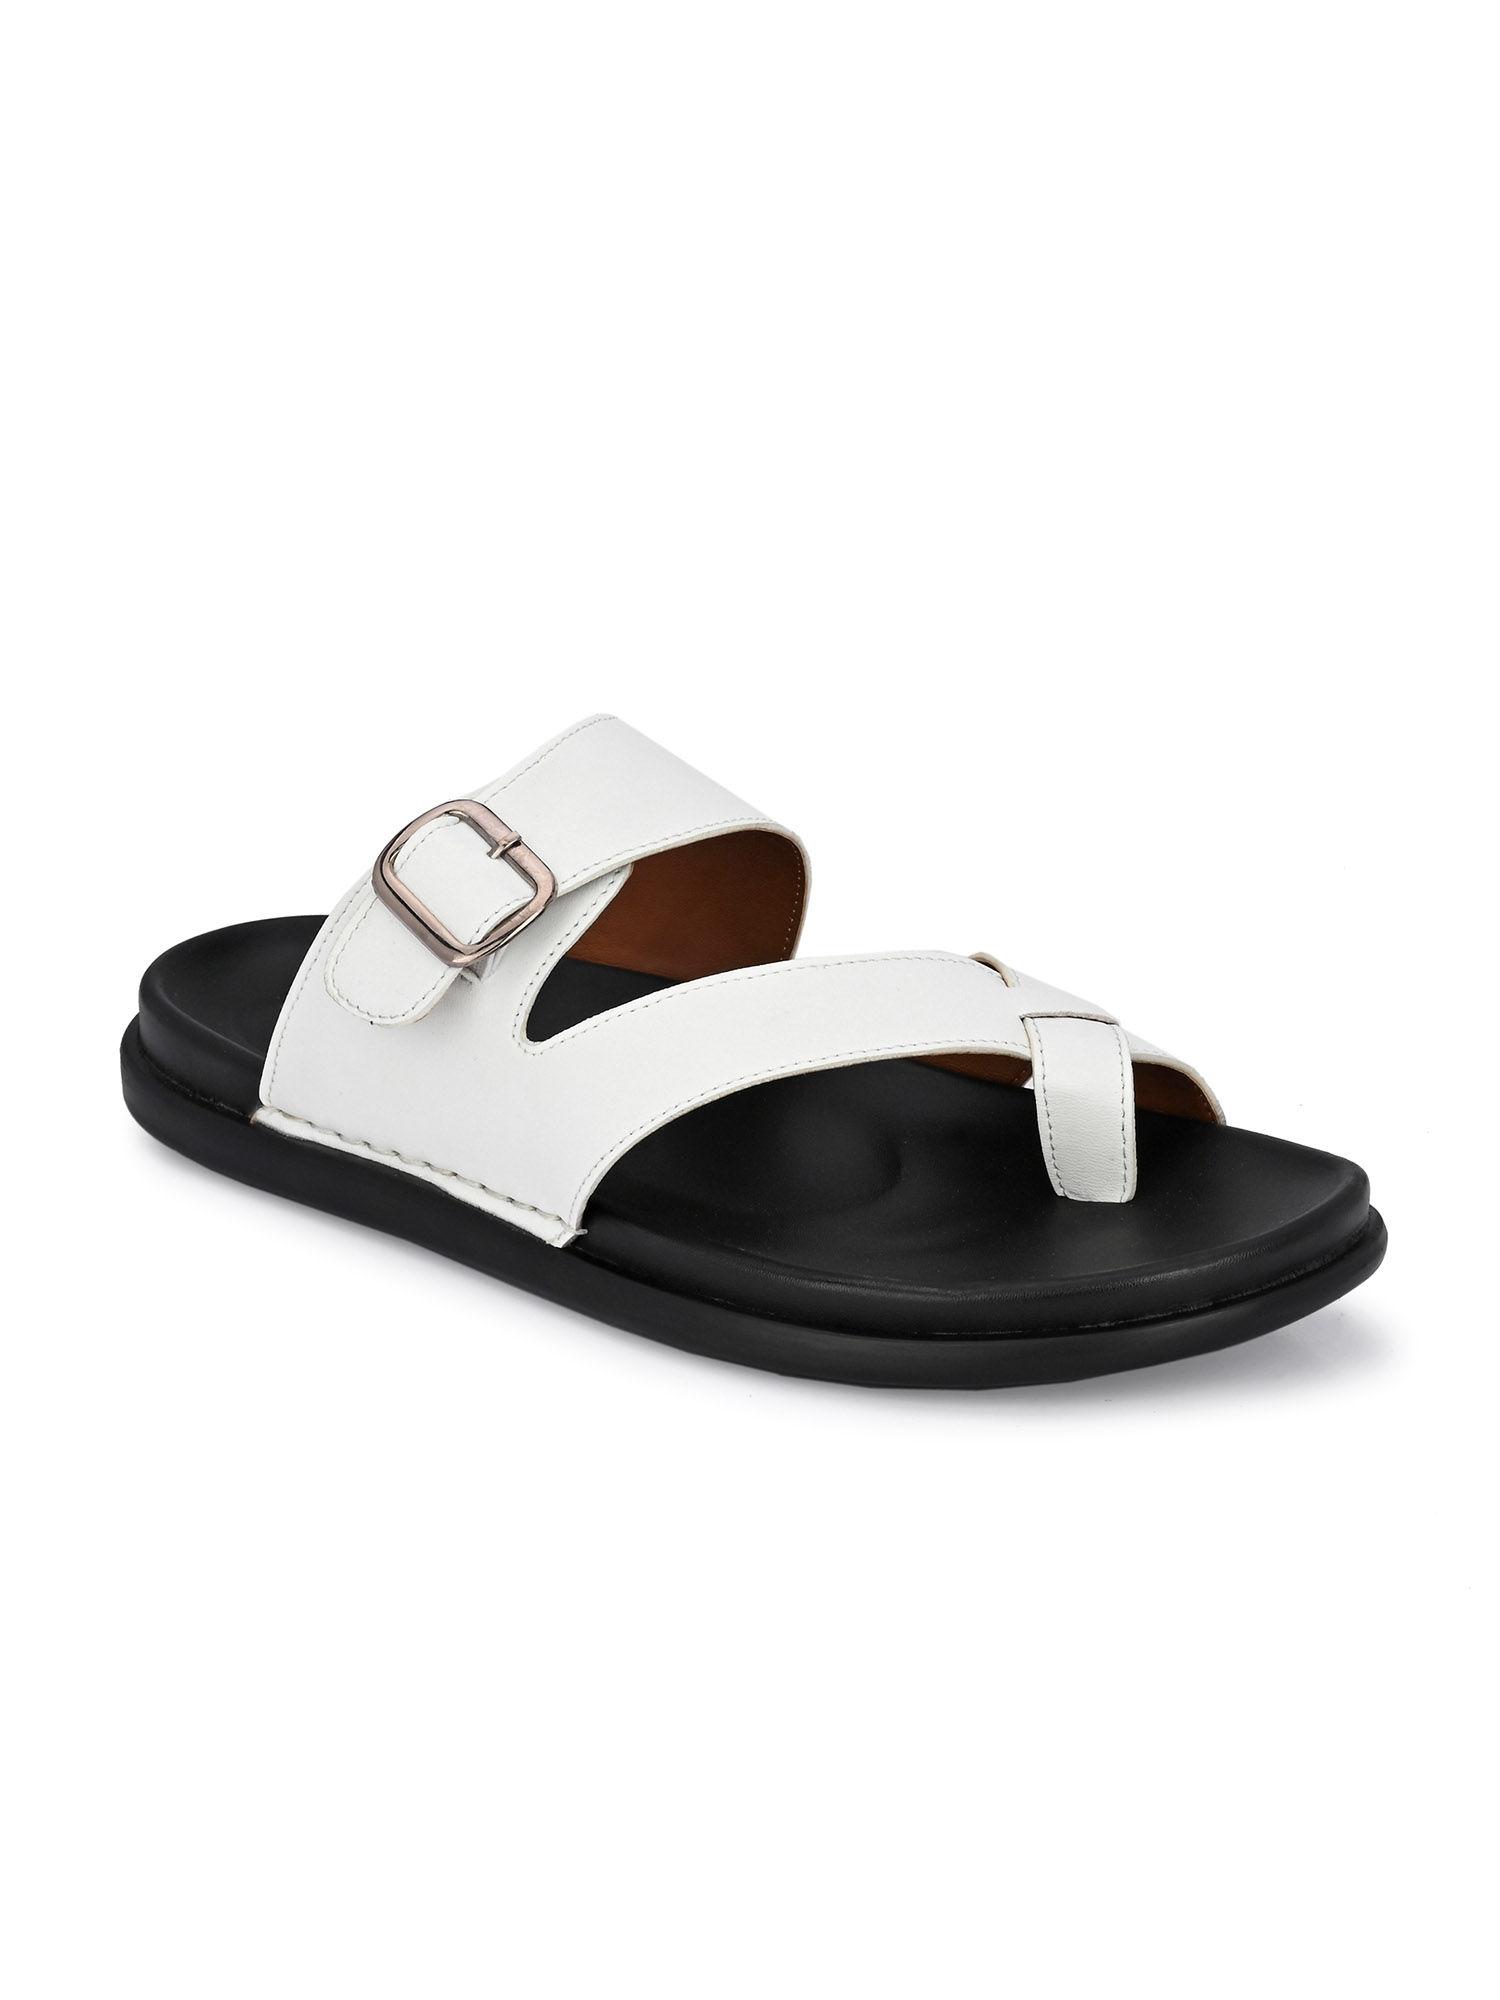 men's white leather toe-ring slippers